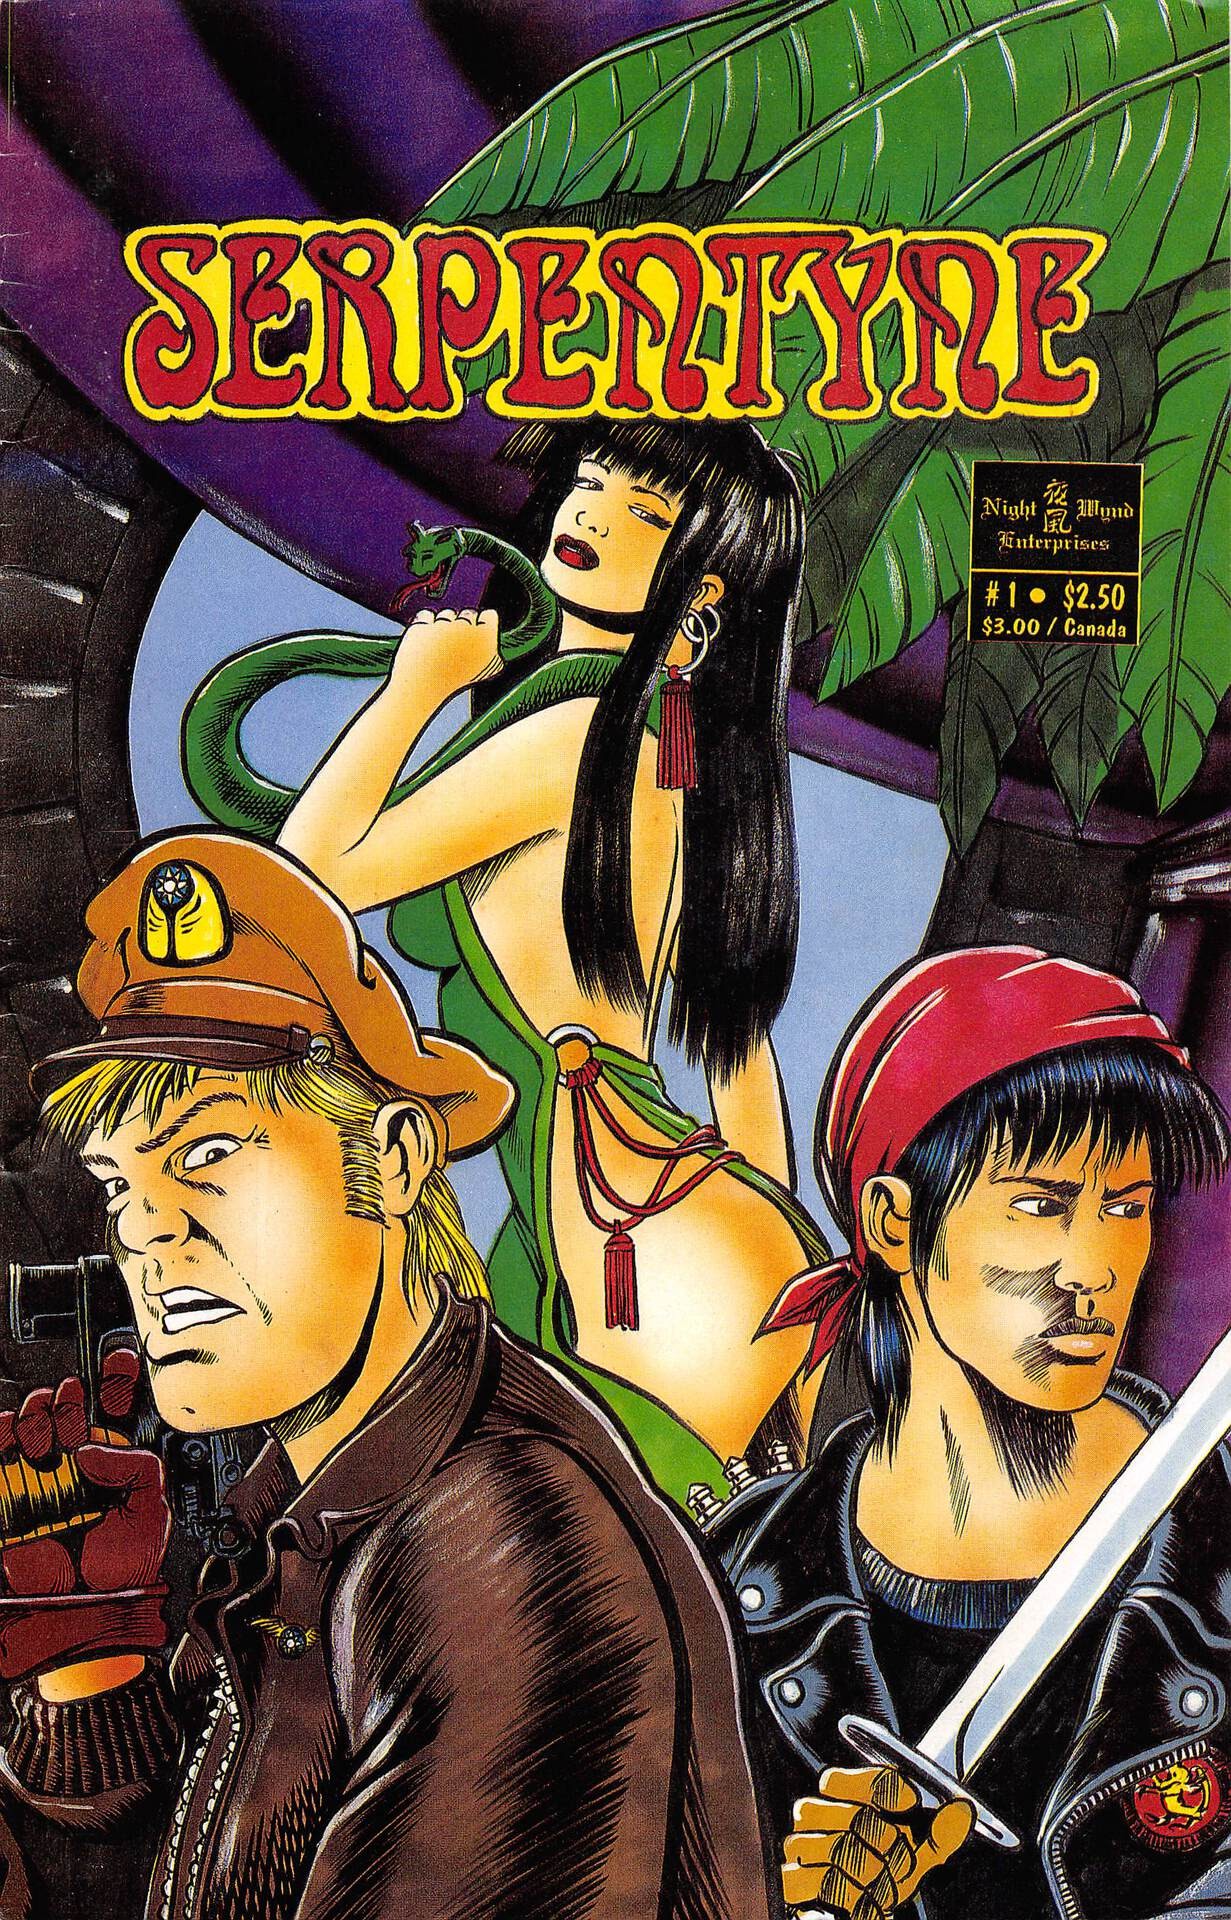 Read online Serpentyne comic -  Issue #1 - 1